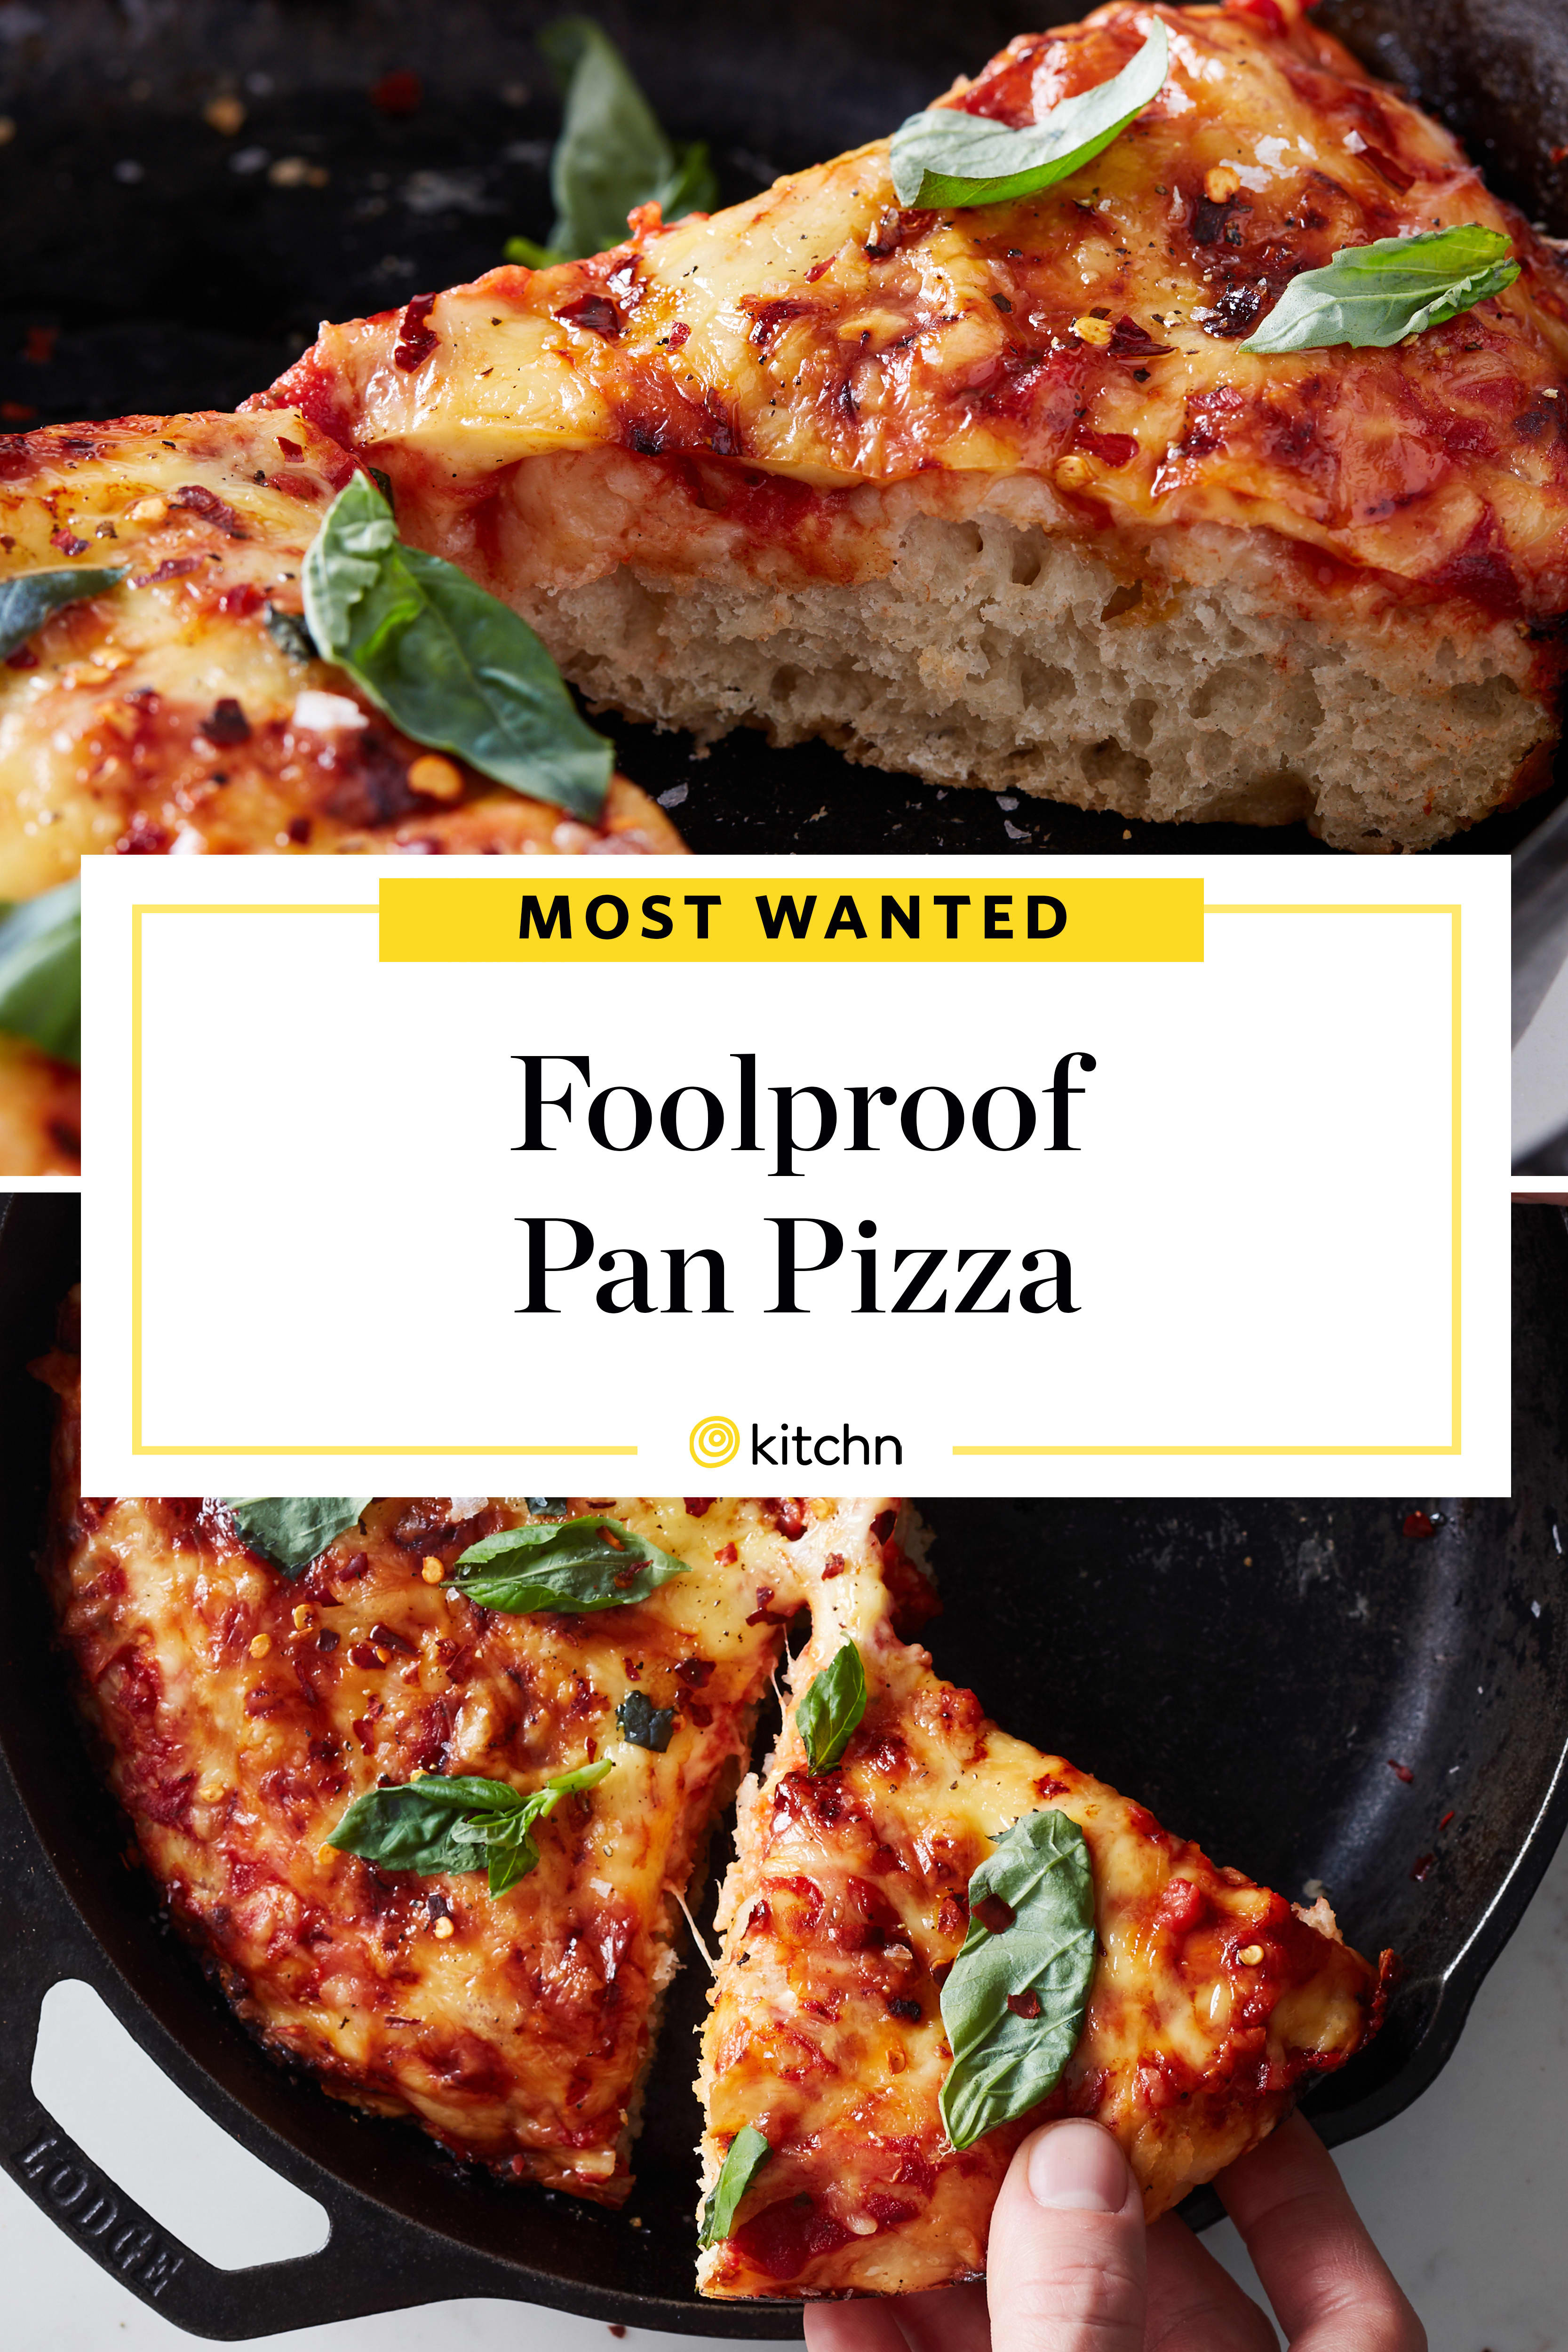 https://cdn.apartmenttherapy.info/image/upload/v1614264441/k/Photo/Recipes/2021-02-how-to-pan-pizza/foolproofpanpizza.jpg